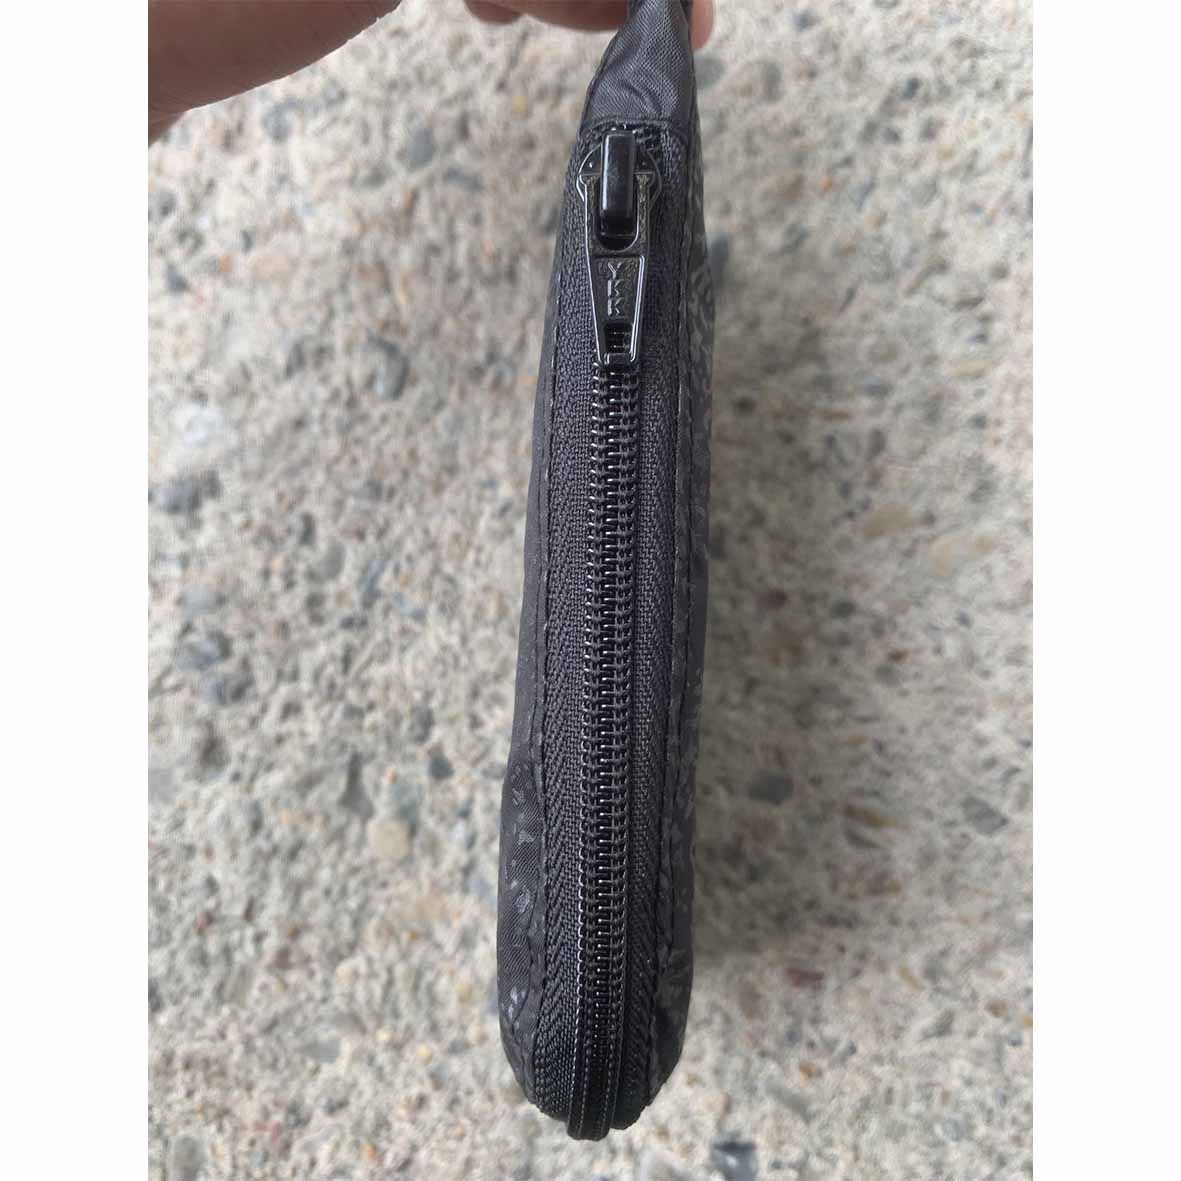 Portable Gripstop Nylon Wallet (品番CPSEW-010-GN)